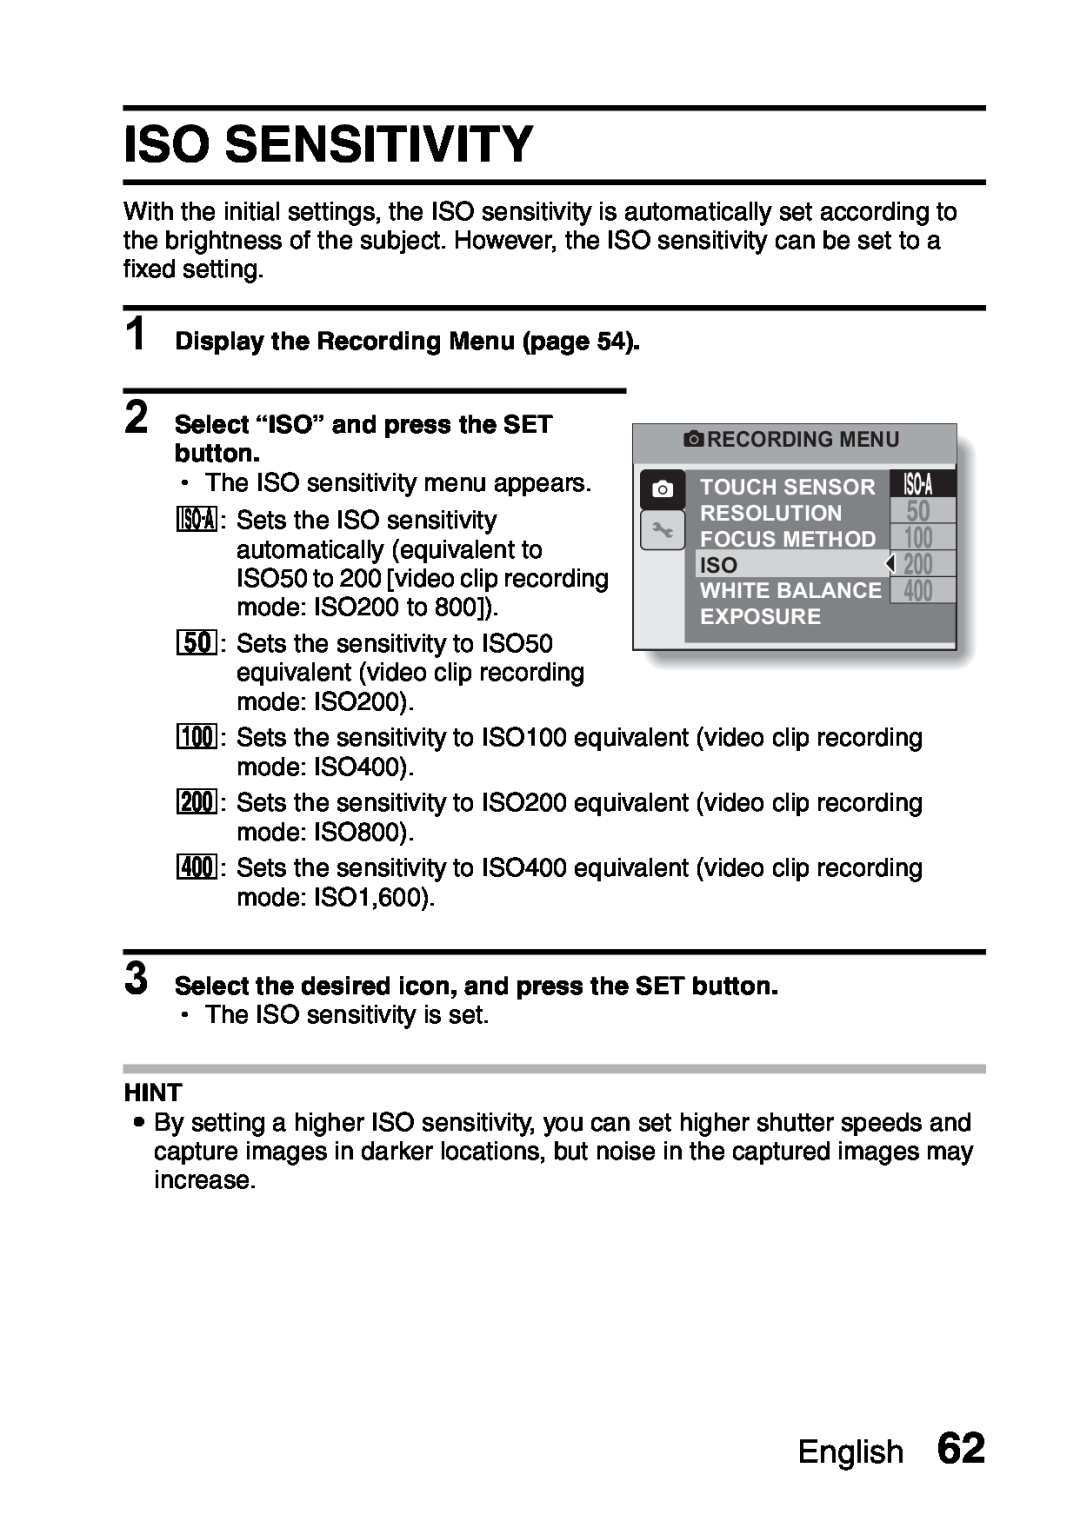 Sanyo VPC-S60 Iso Sensitivity, Select “ISO” and press the SET button, English, Display the Recording Menu page, Hint 